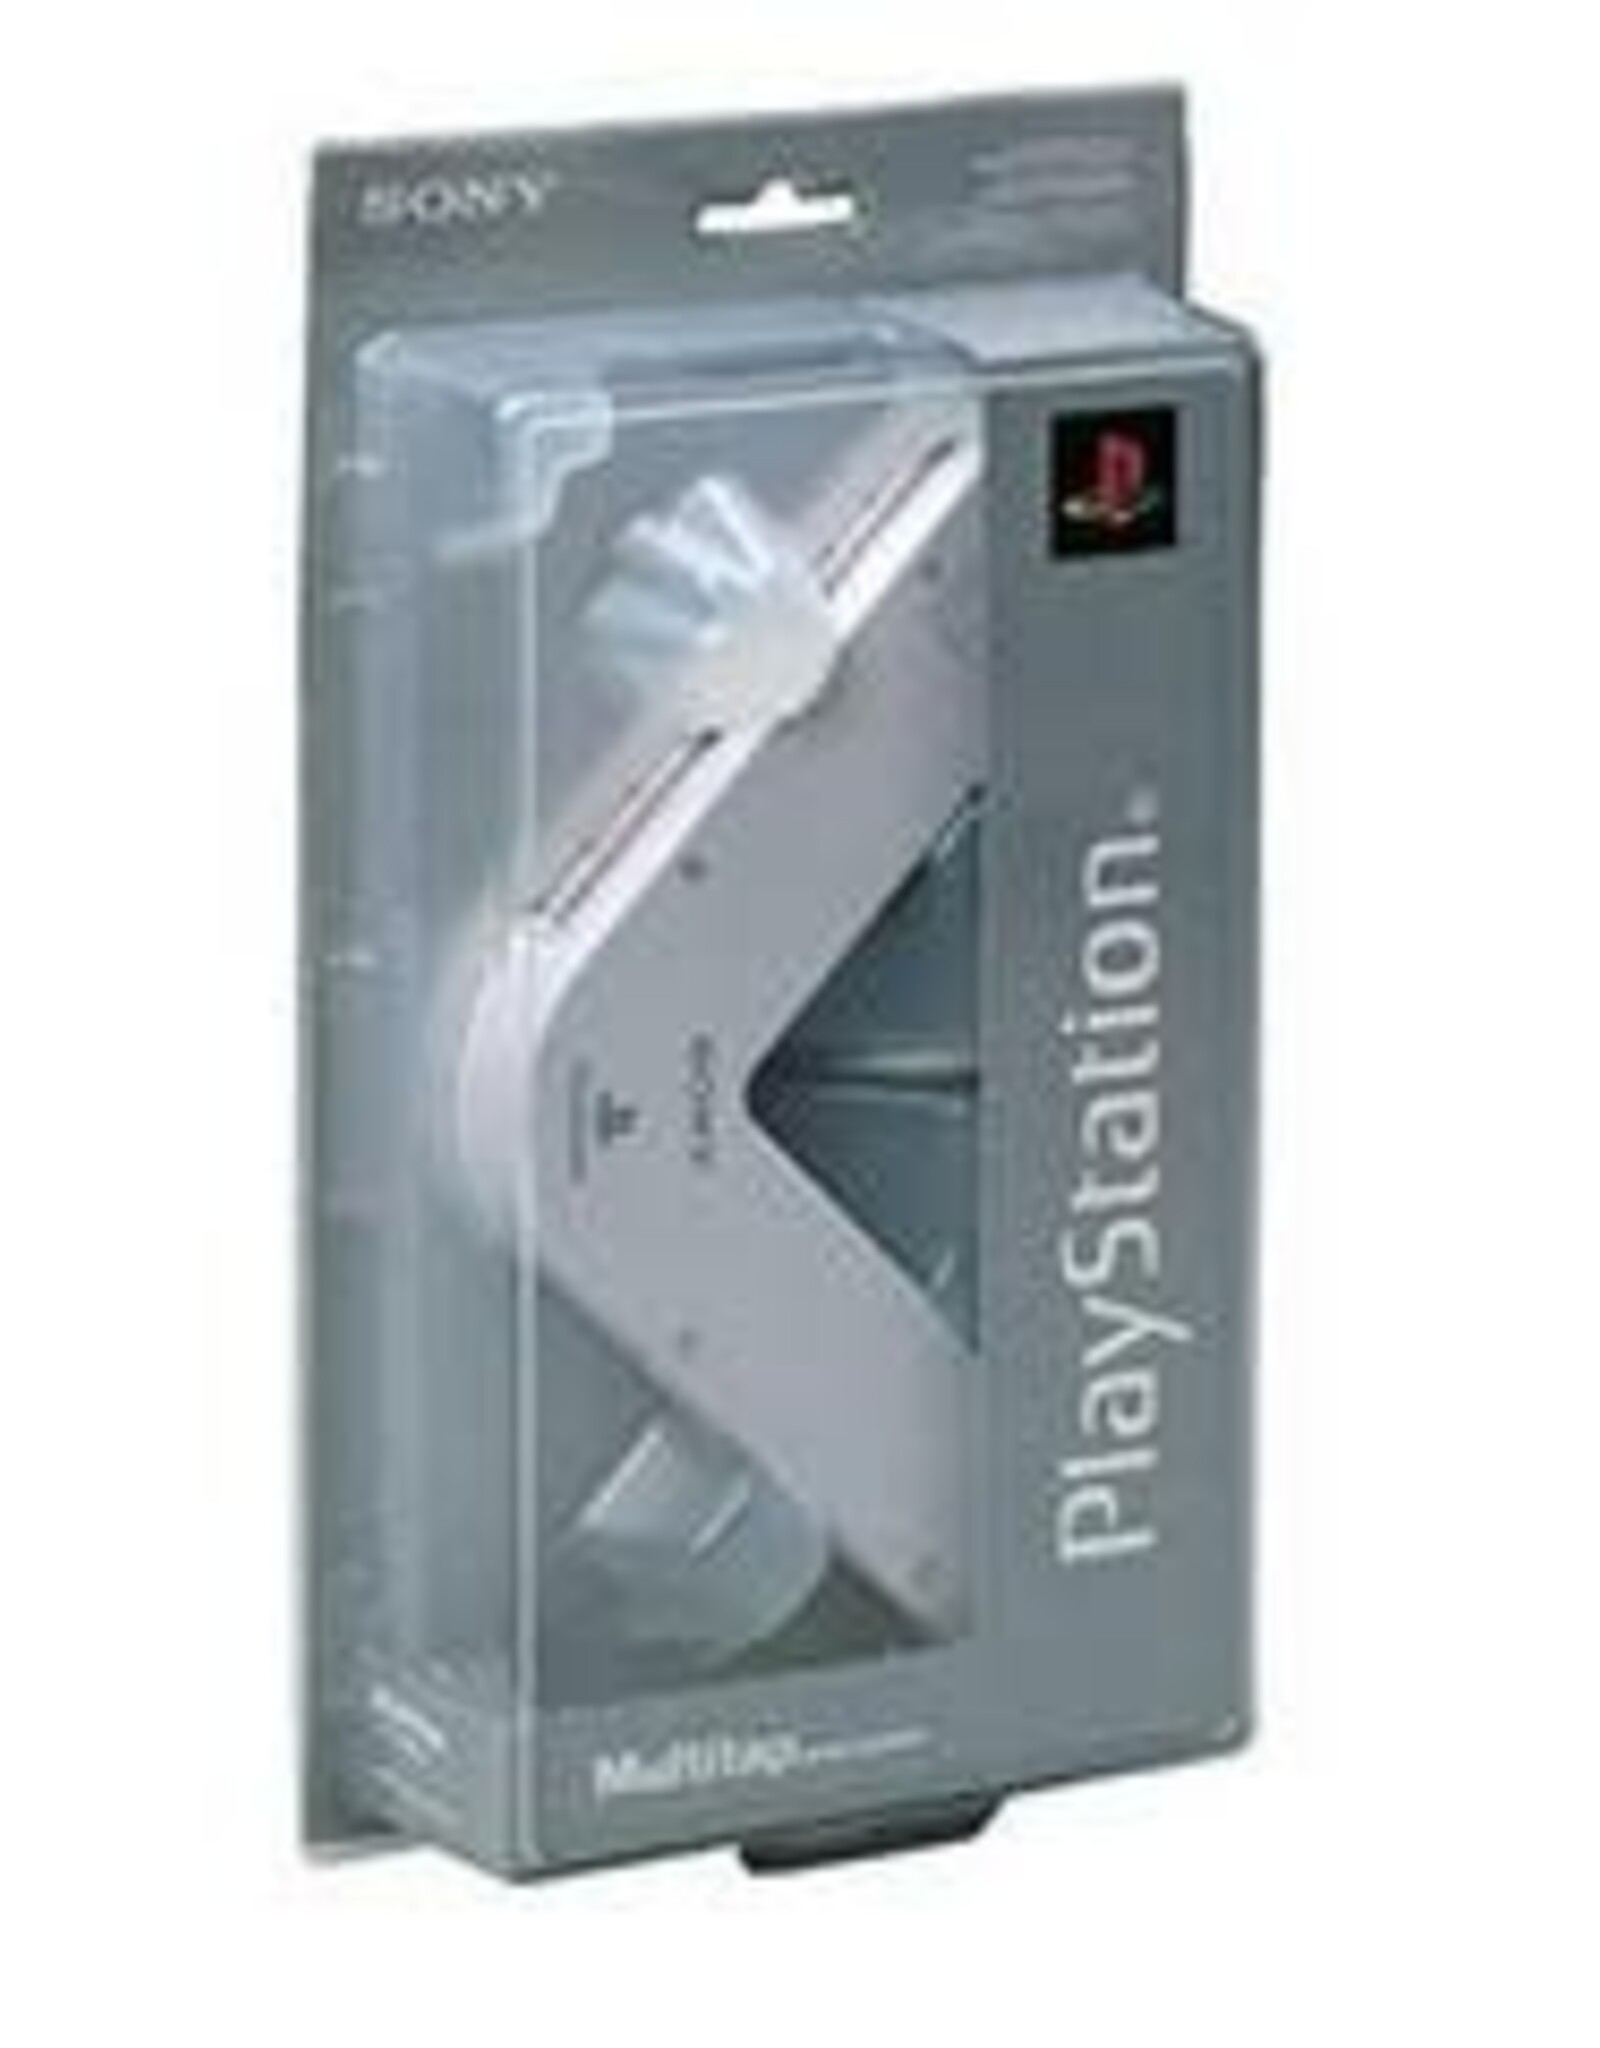 Playstation PS1 Playstation MultiTap Adaptor (OEM, Brand New)